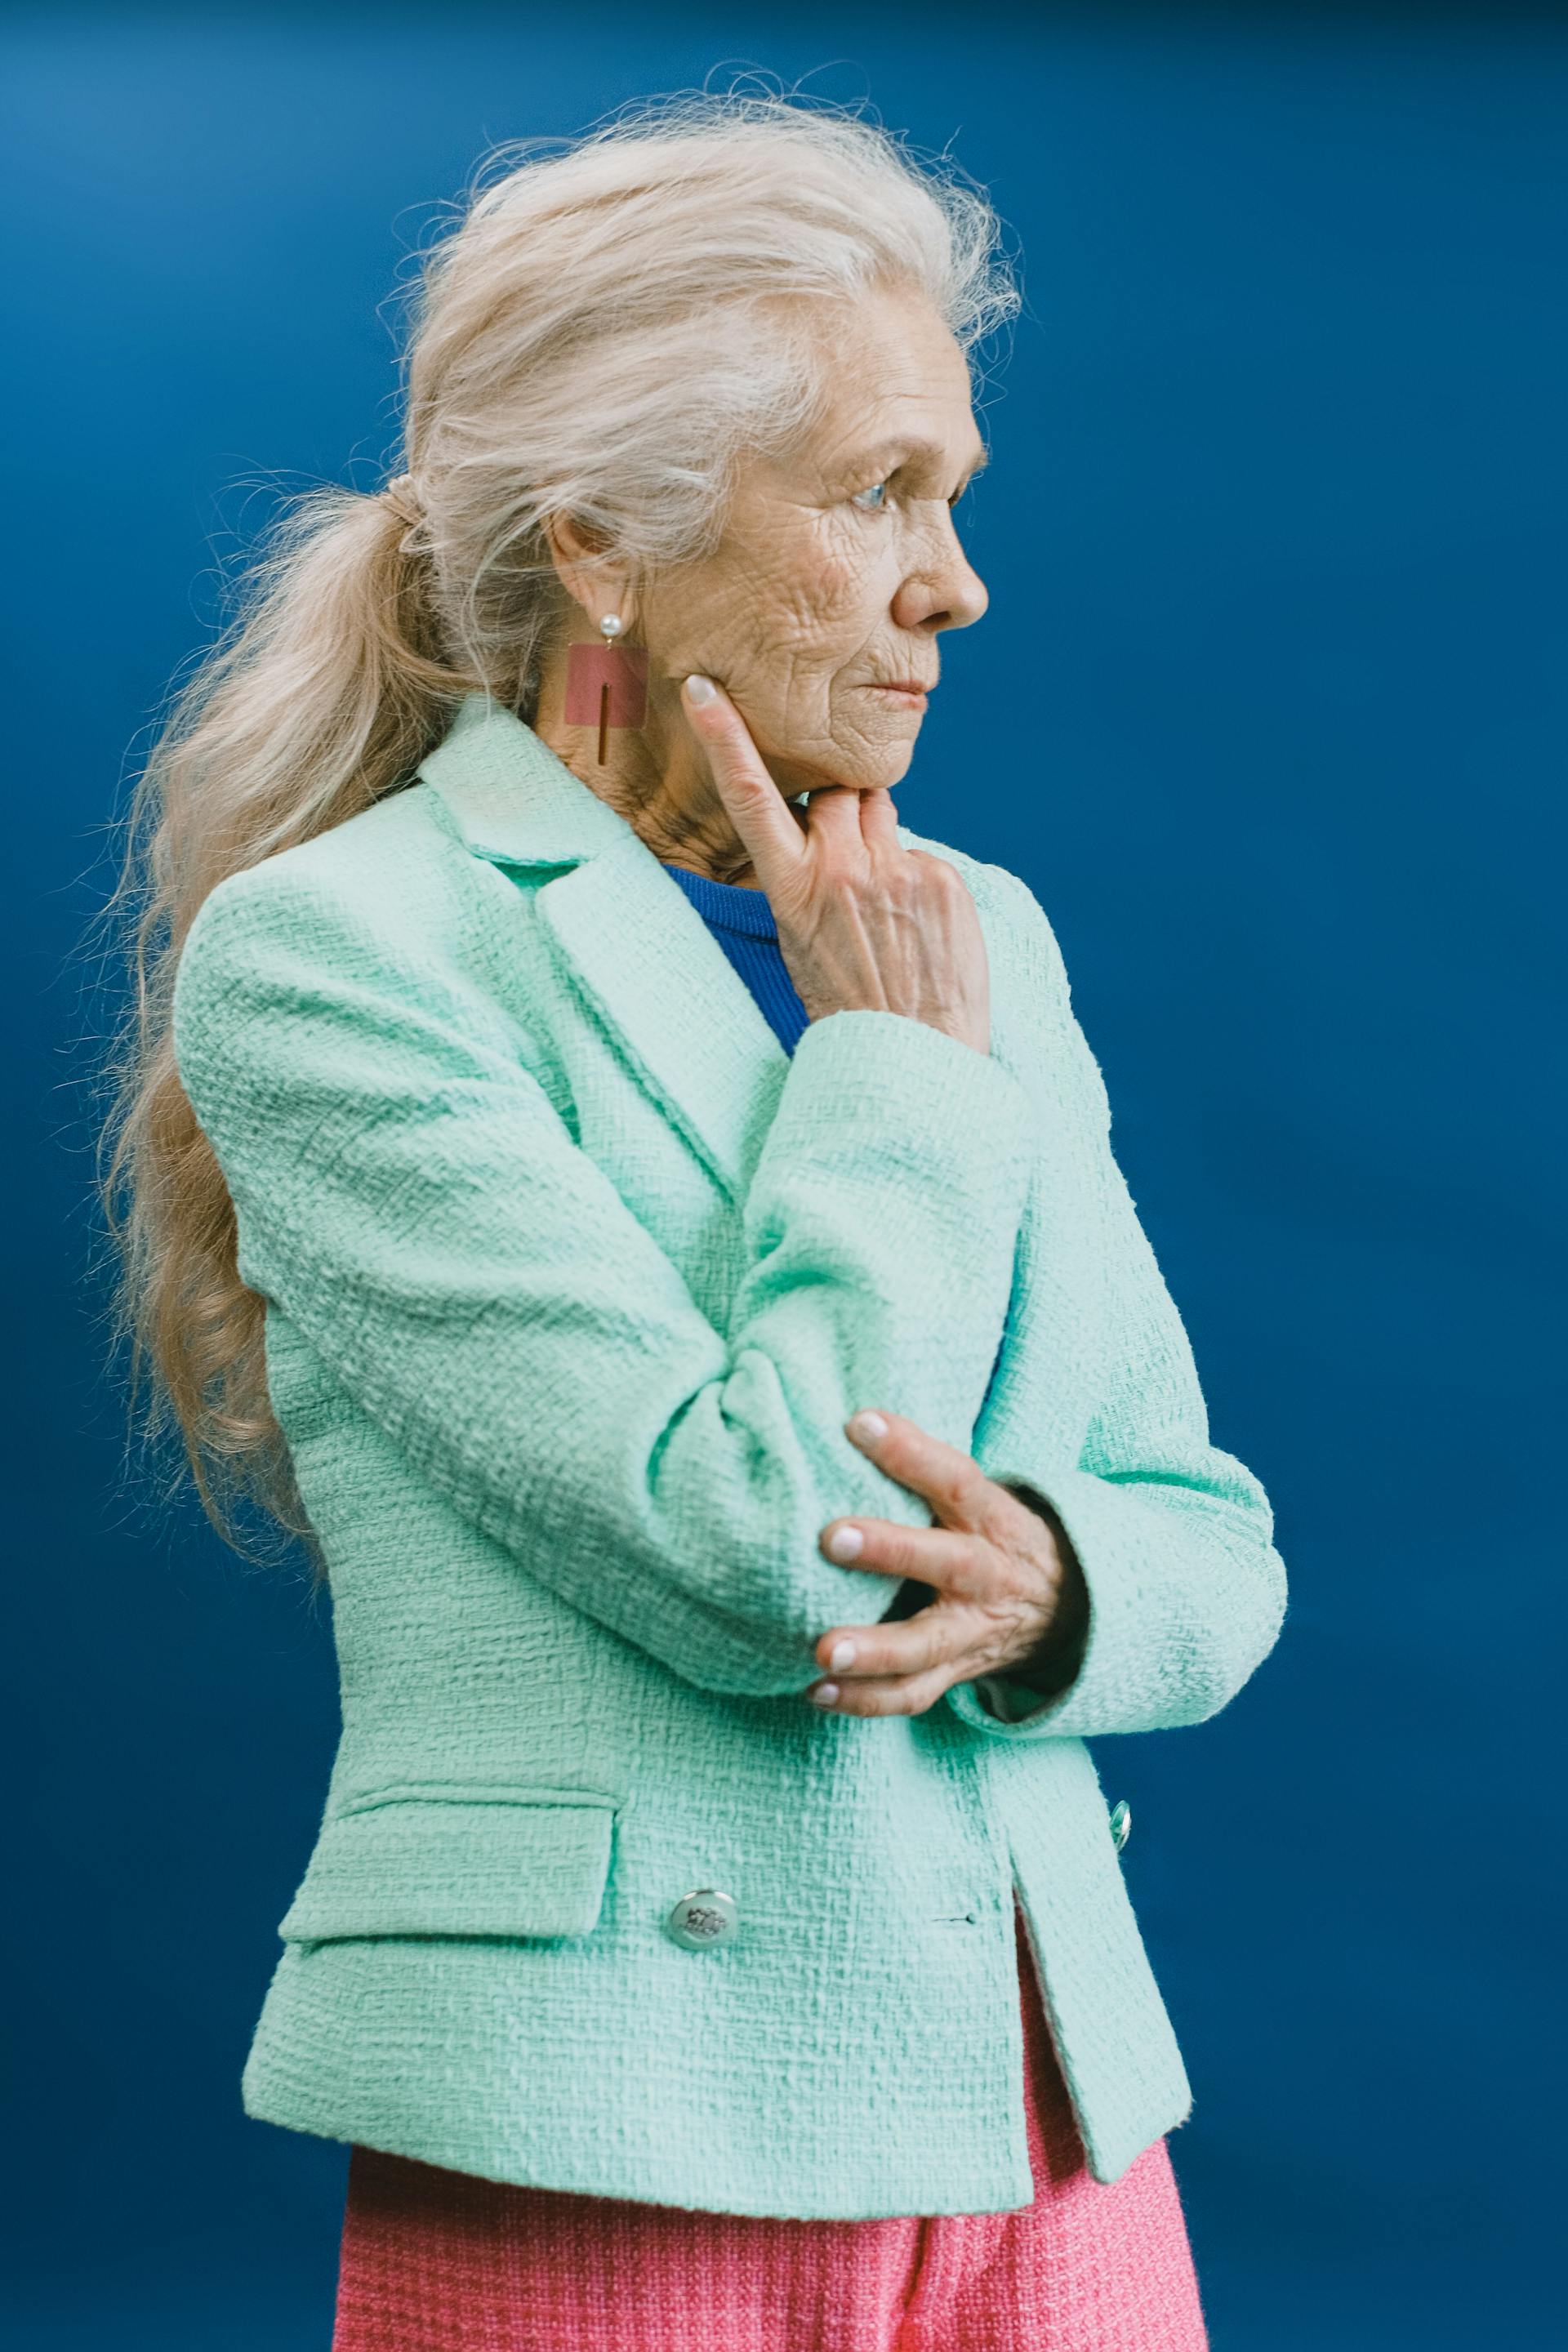 An upset older lady | Source: Pexels